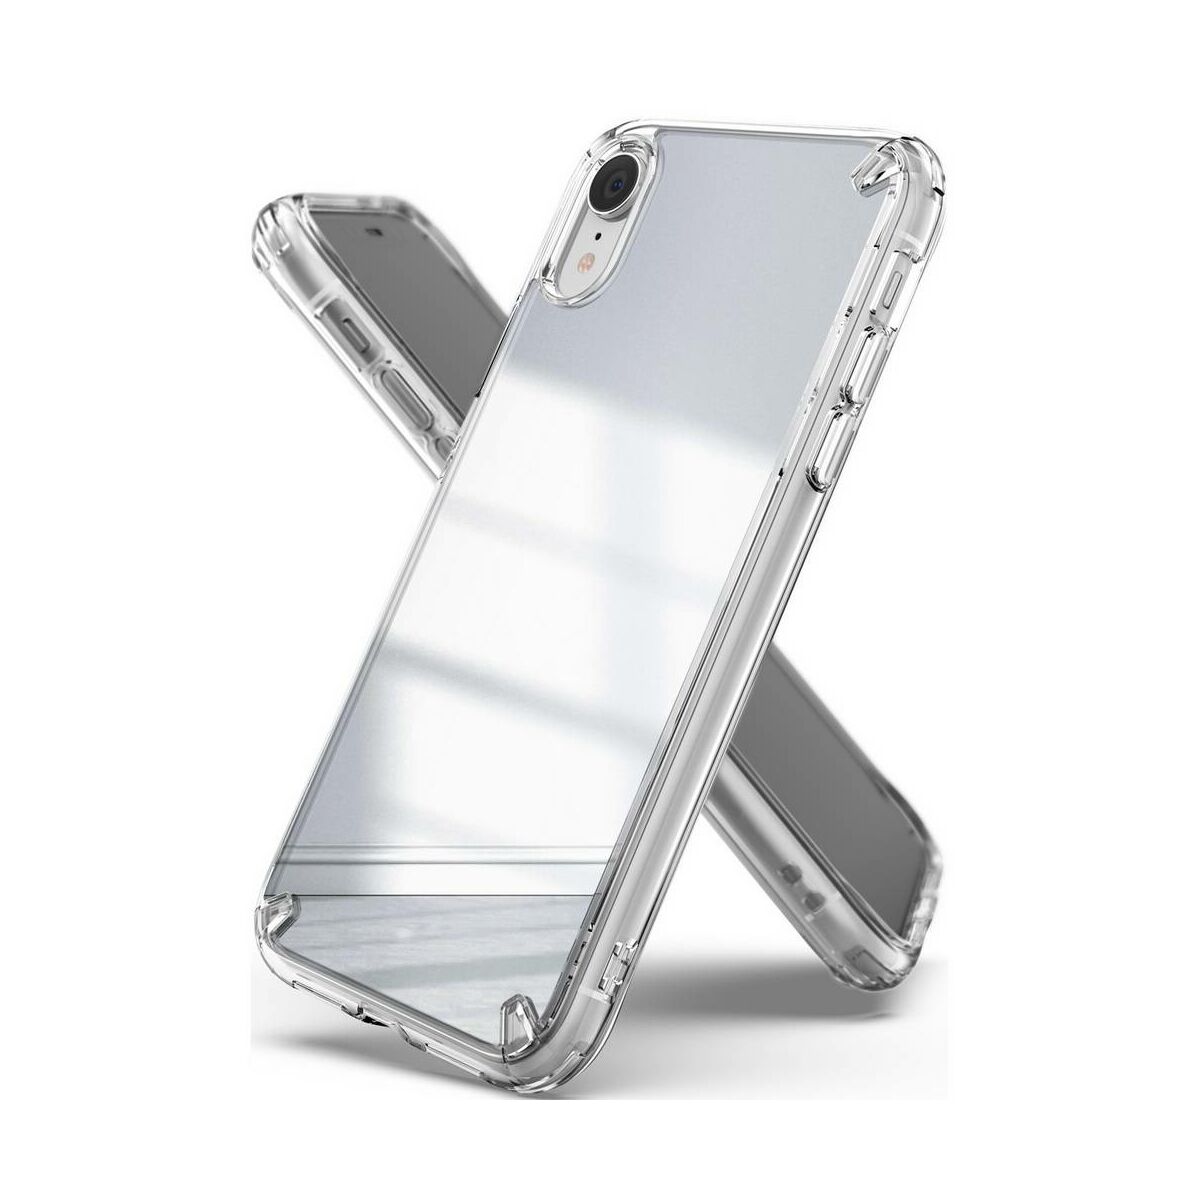 Ringke iPhone XR tok, Mirror, szürke